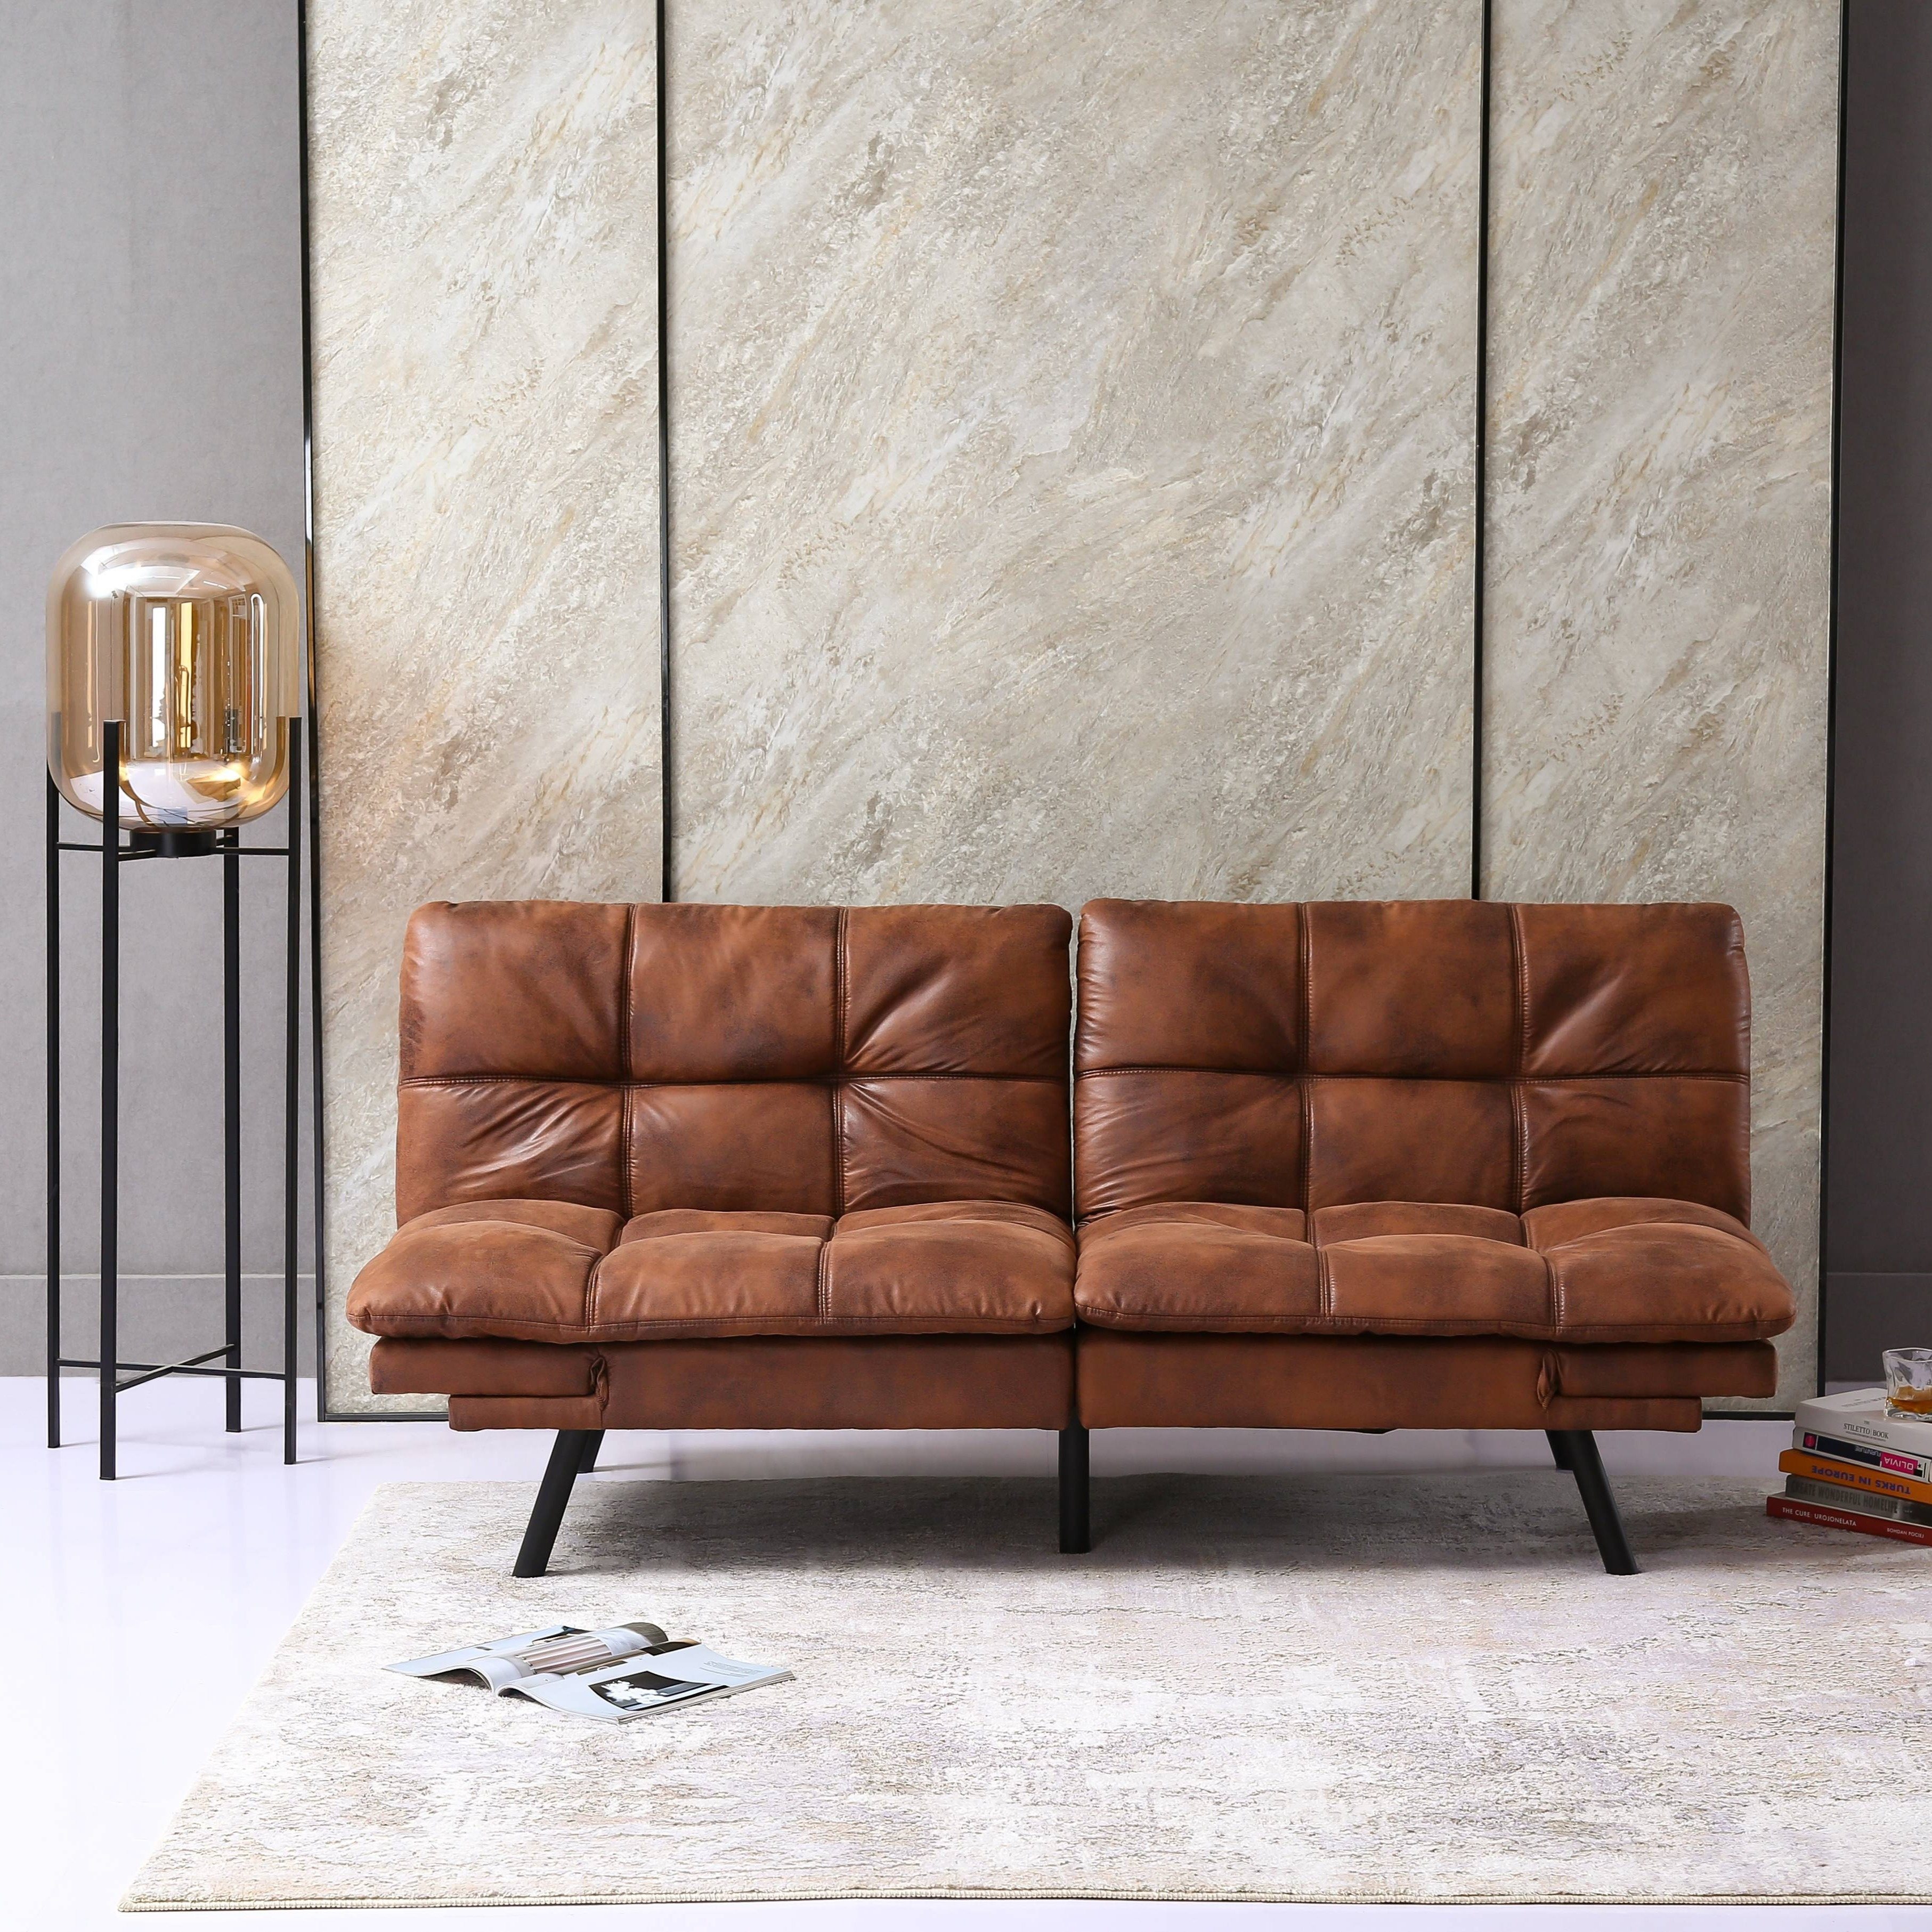 

Smartdesignia Furniture Sofa Bed 71 Inch, Futon Couch, Convertible Leather Folding Sleeper Sofa, Adjustable Backrest